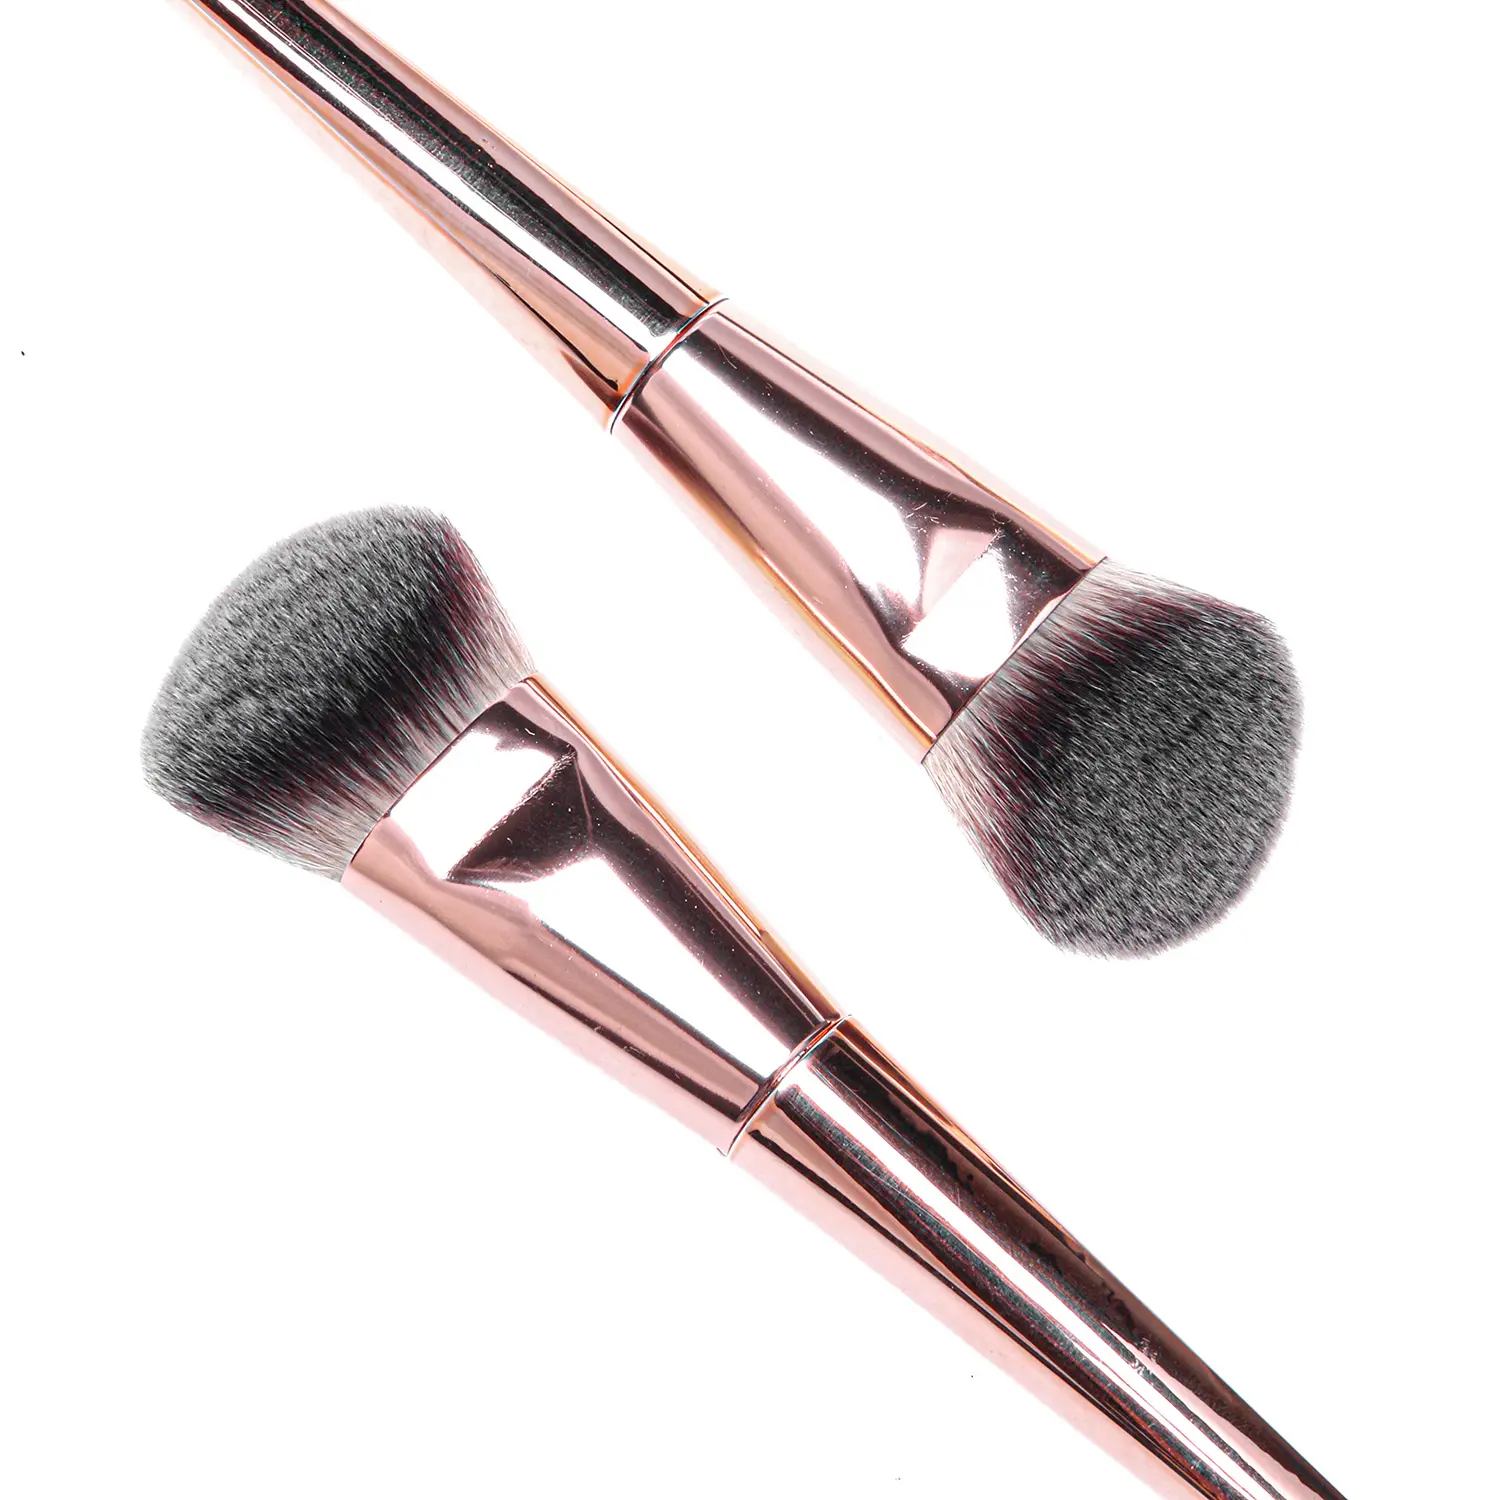 Travel single brush round airbrush makeup foundation brush blending for liquid cream bronzer